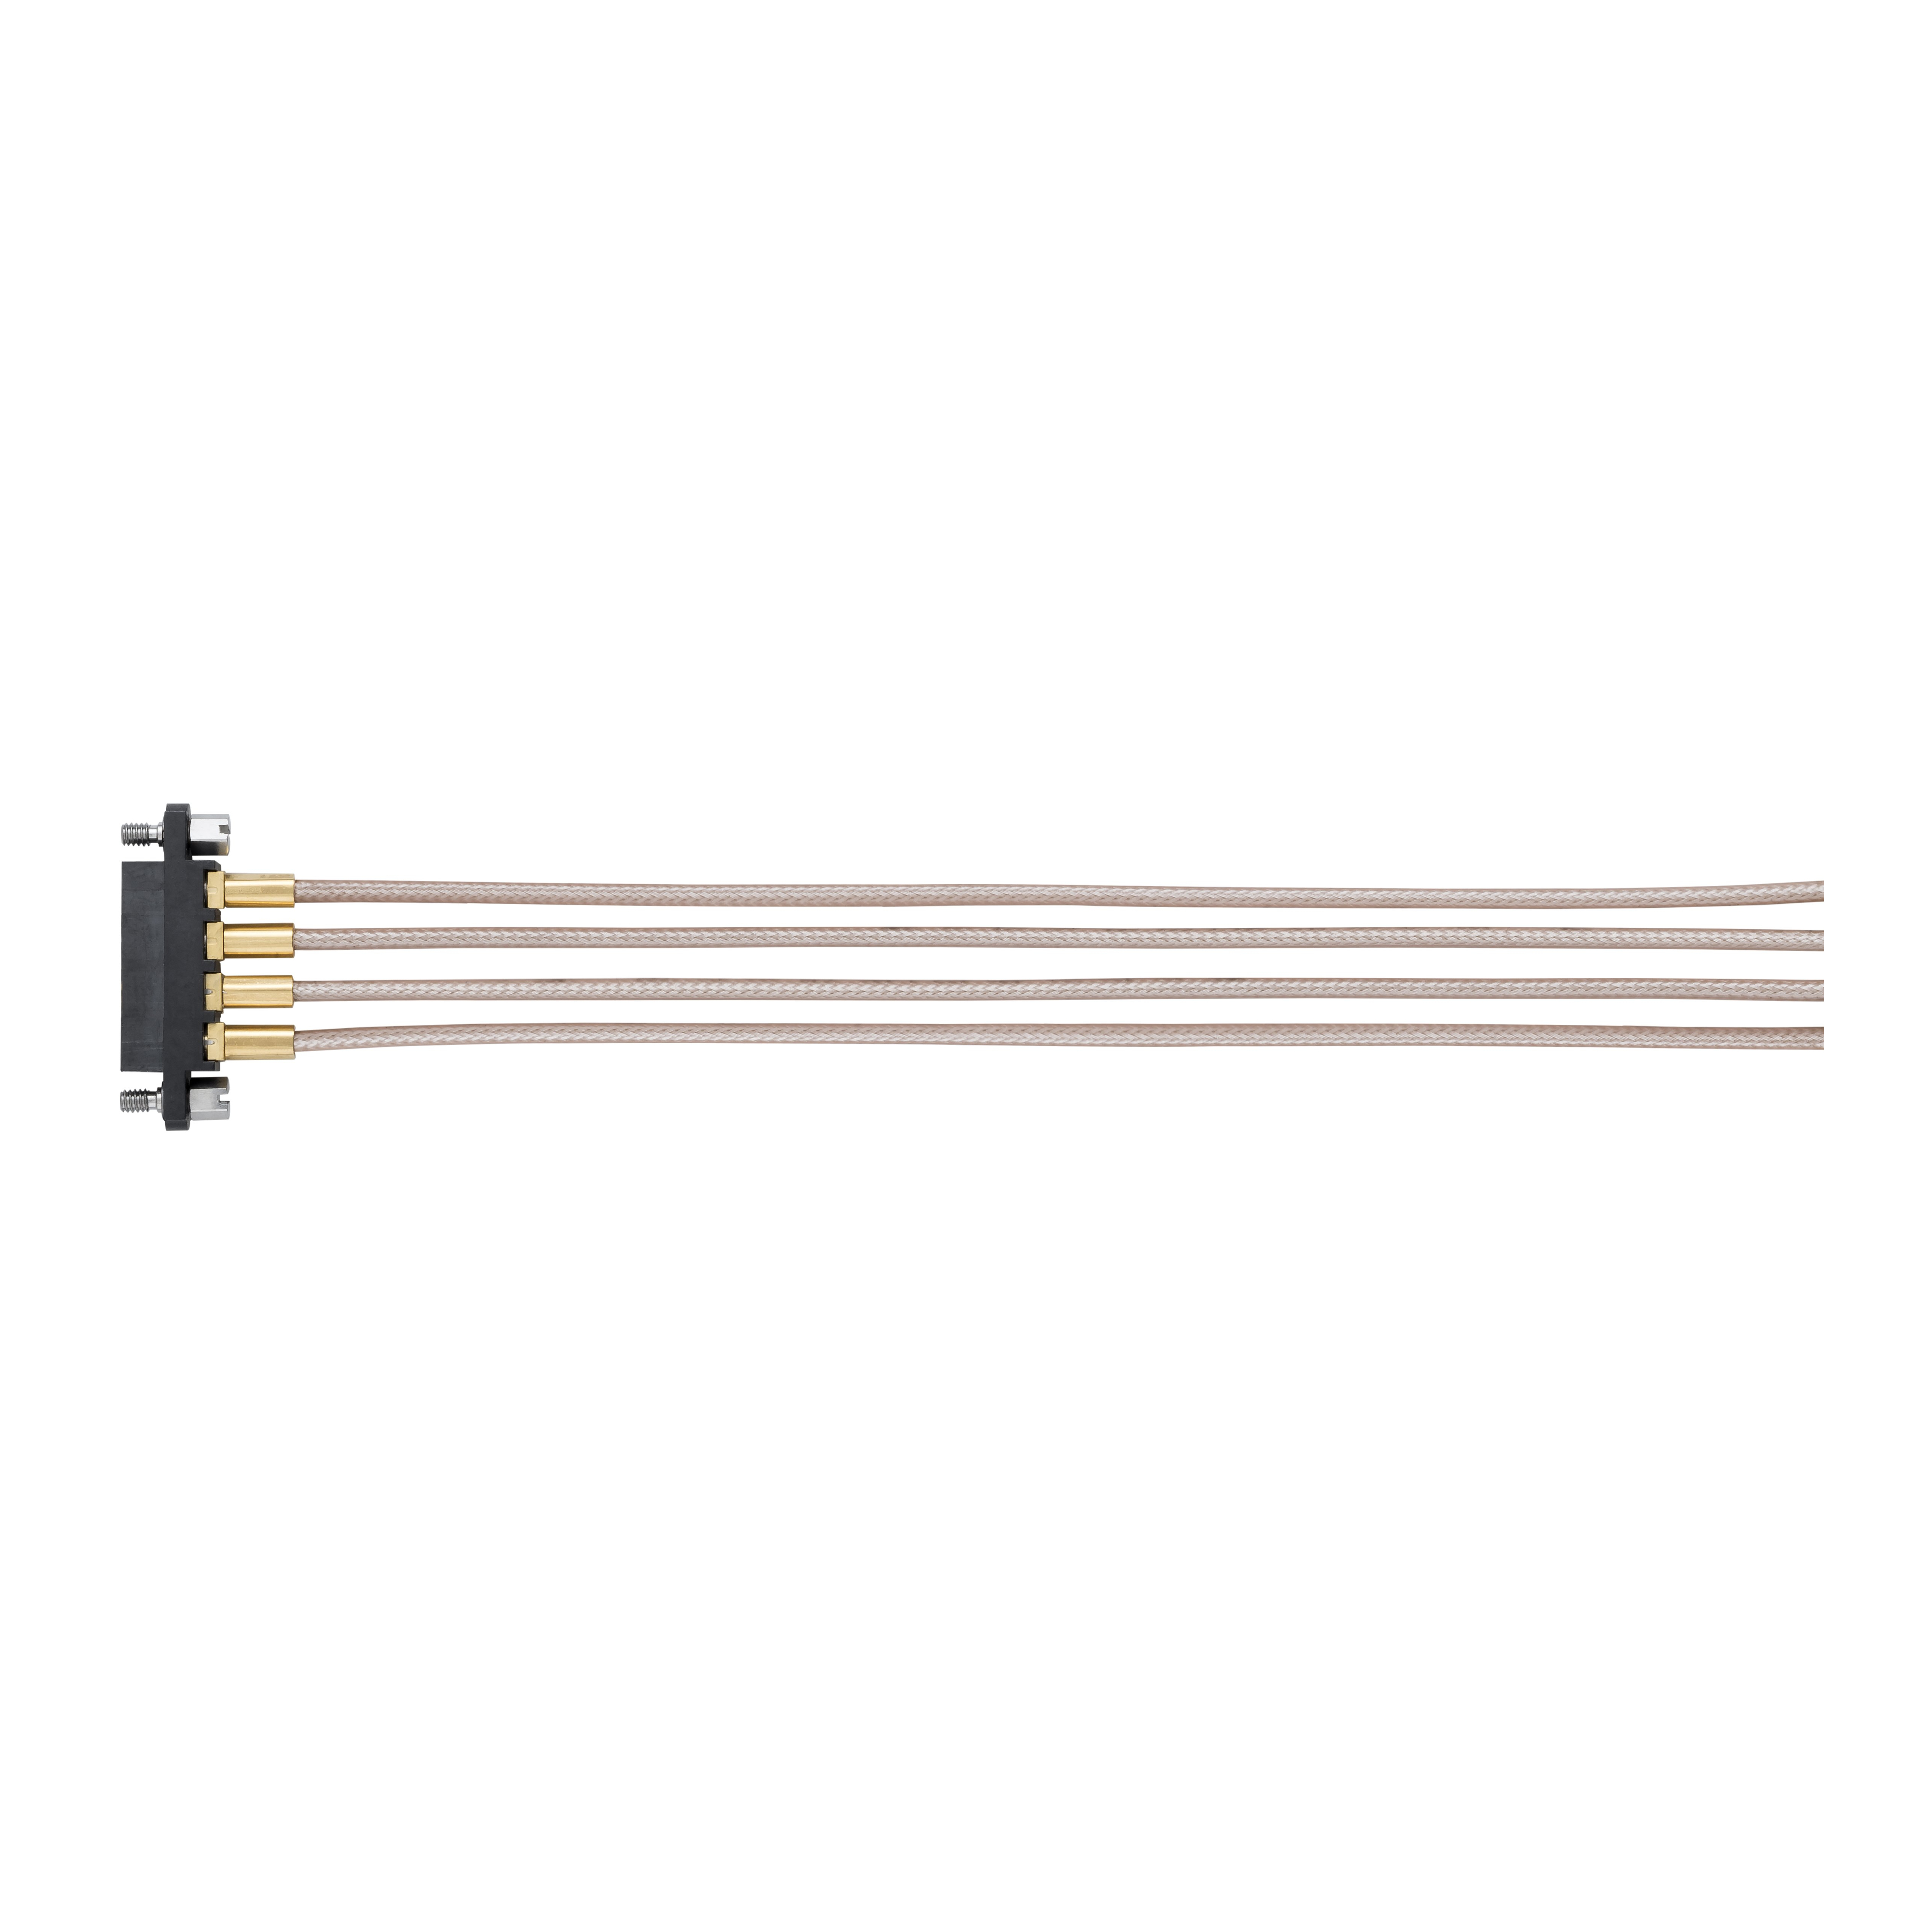 M80-FC105-04-0150L - 4 Pos. Female SIL RG178 Cable Assembly, 150mm, single-end, Jackscrews